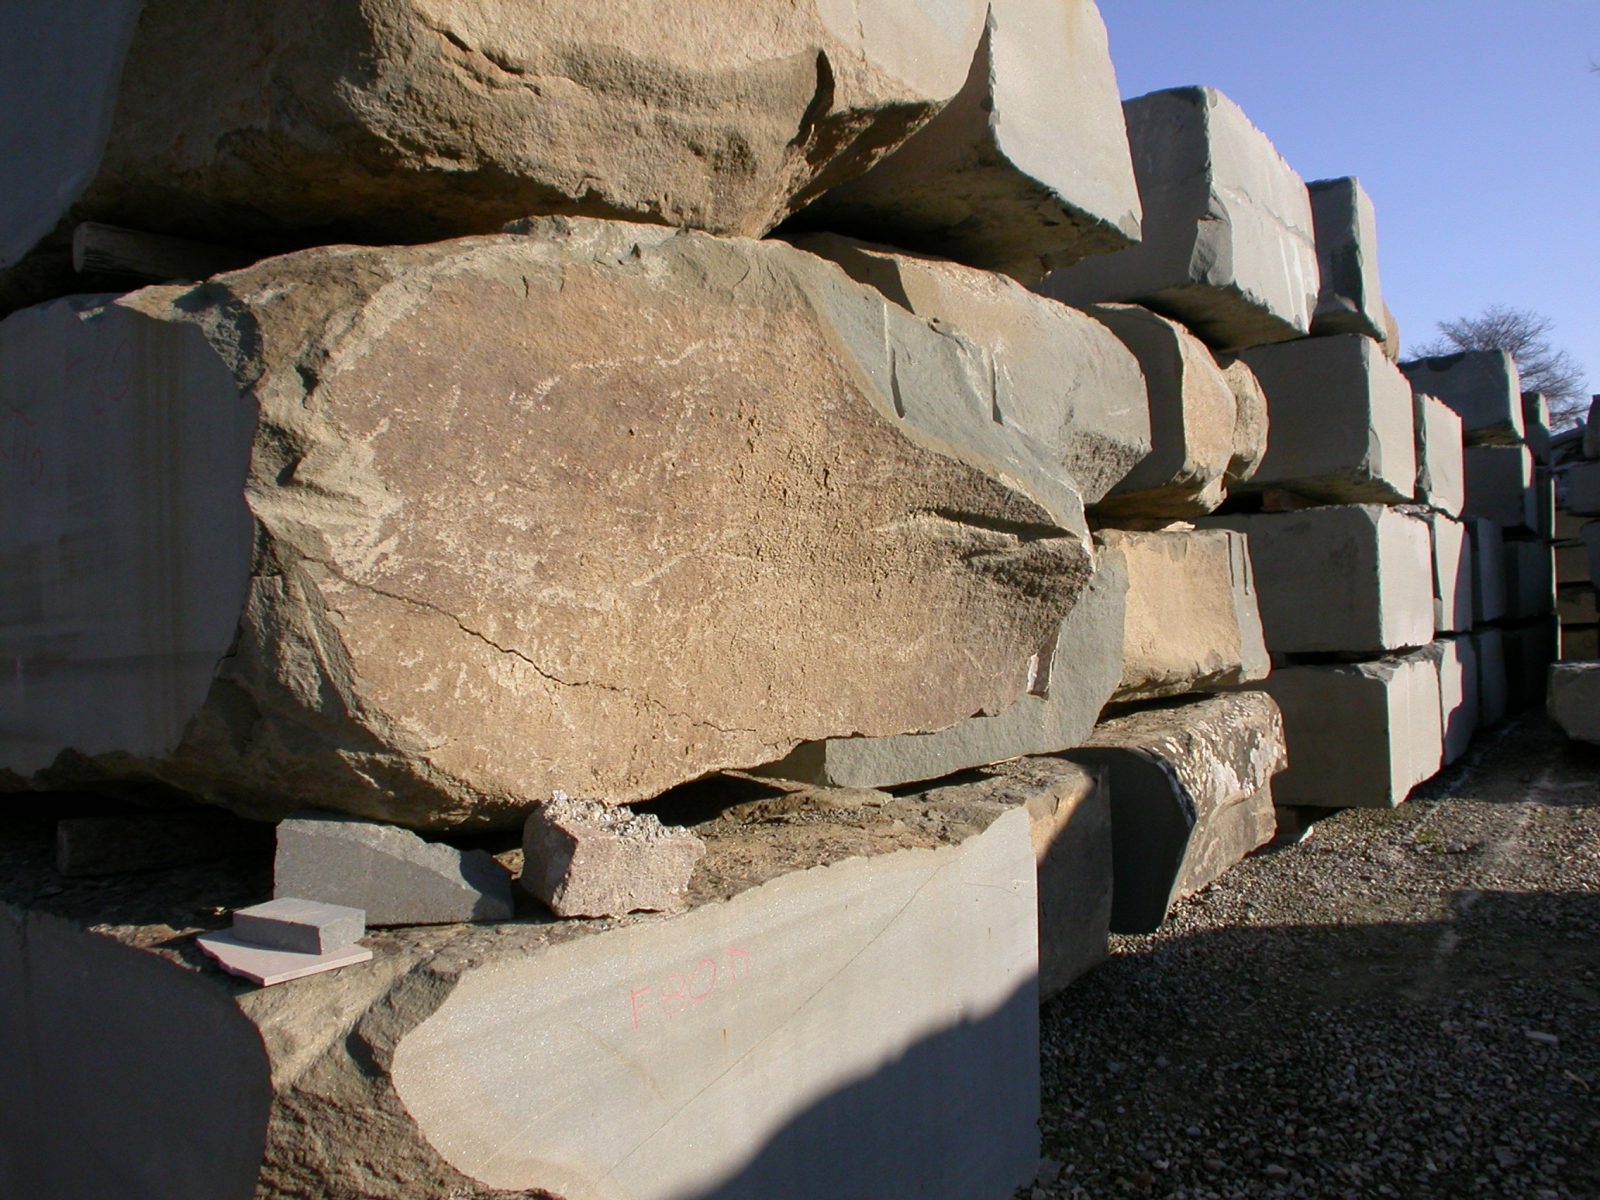 Fontana da muro in pietra arenaria grigia serena - Recuperando